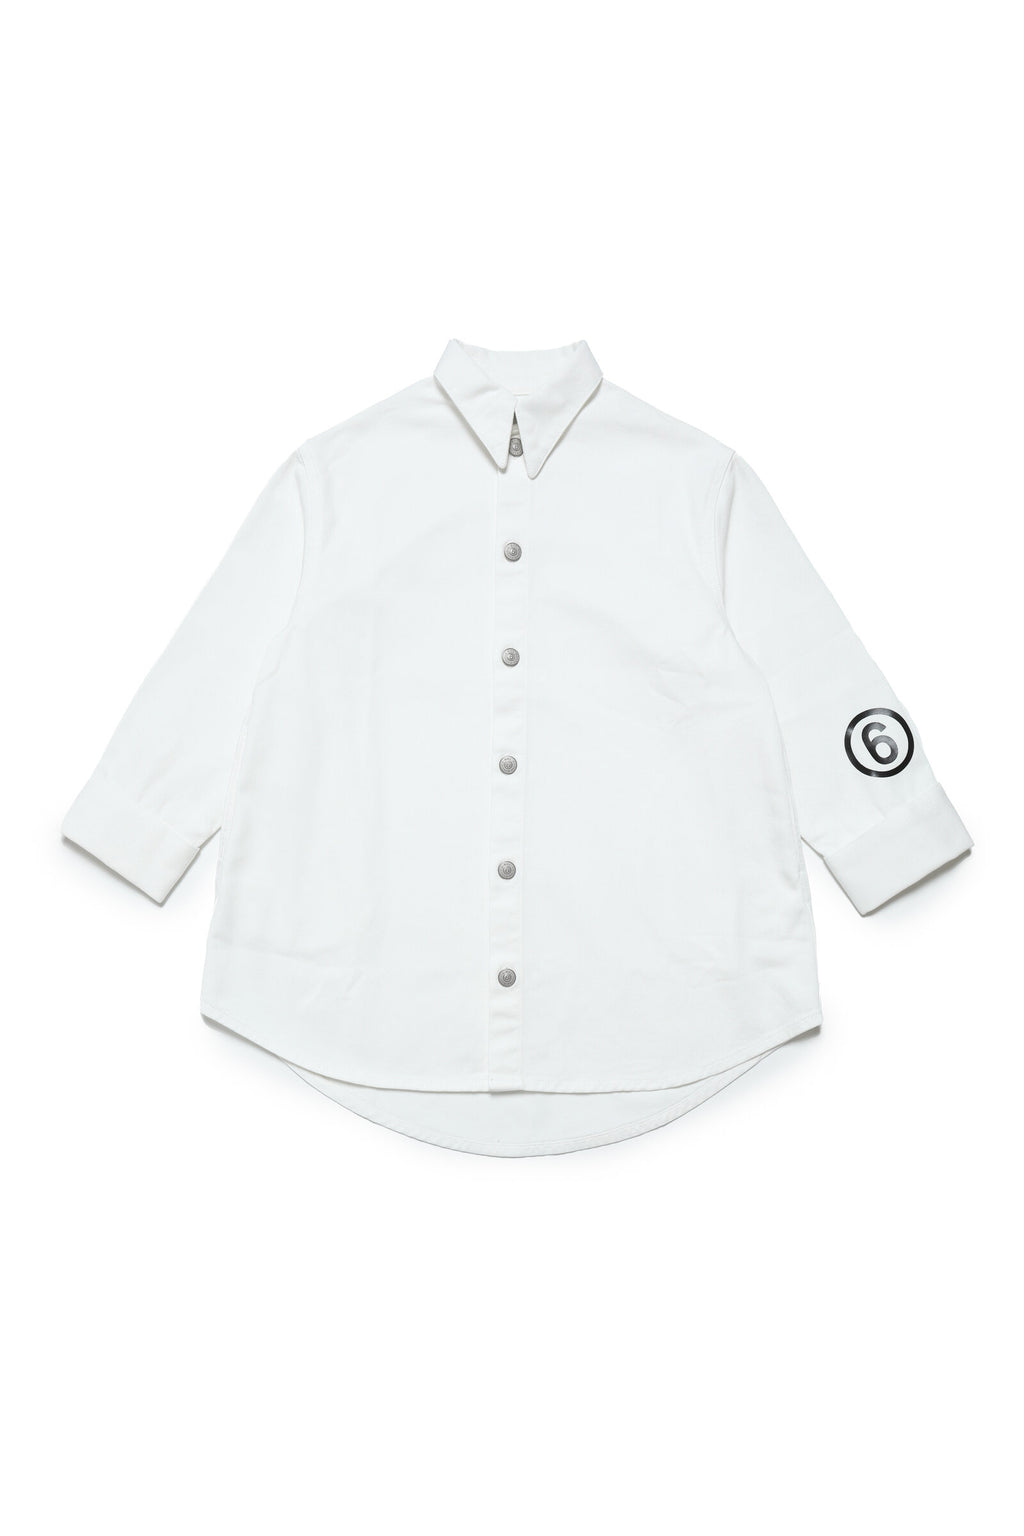 "A-shape" cotton shirt dress with logo